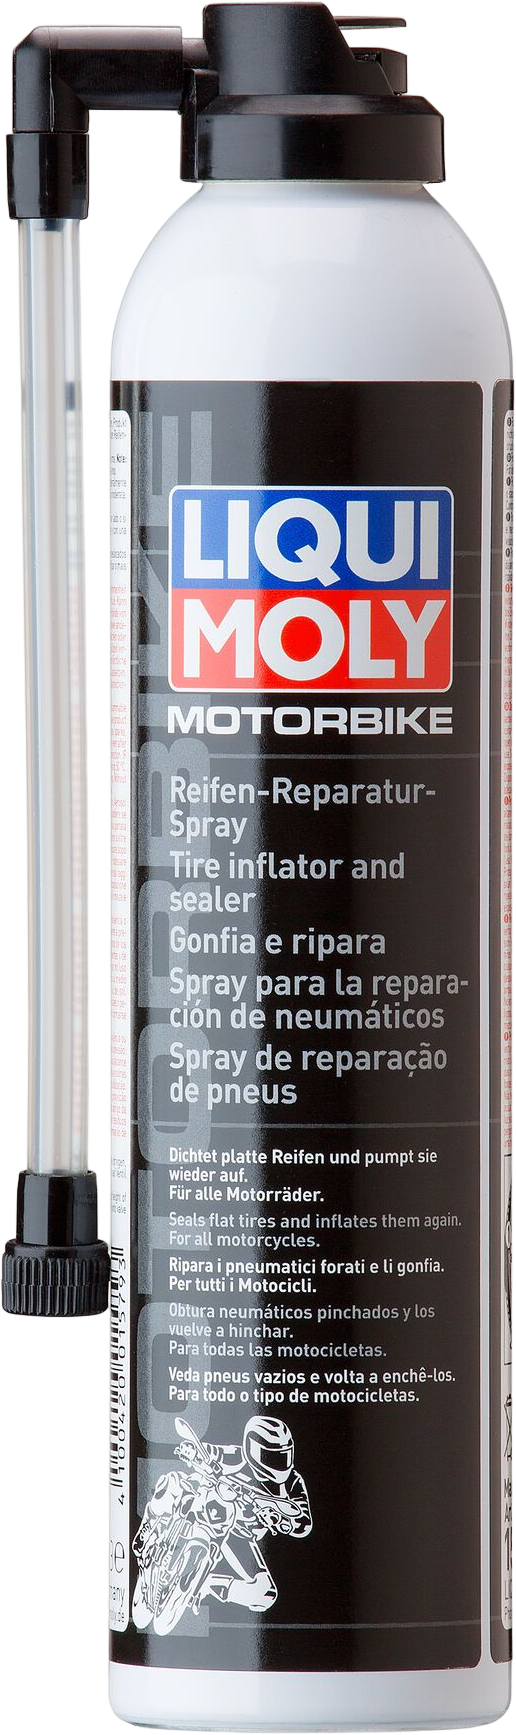 Liqui Moly Motorbike Bandenherstellingsspray, 300 ml